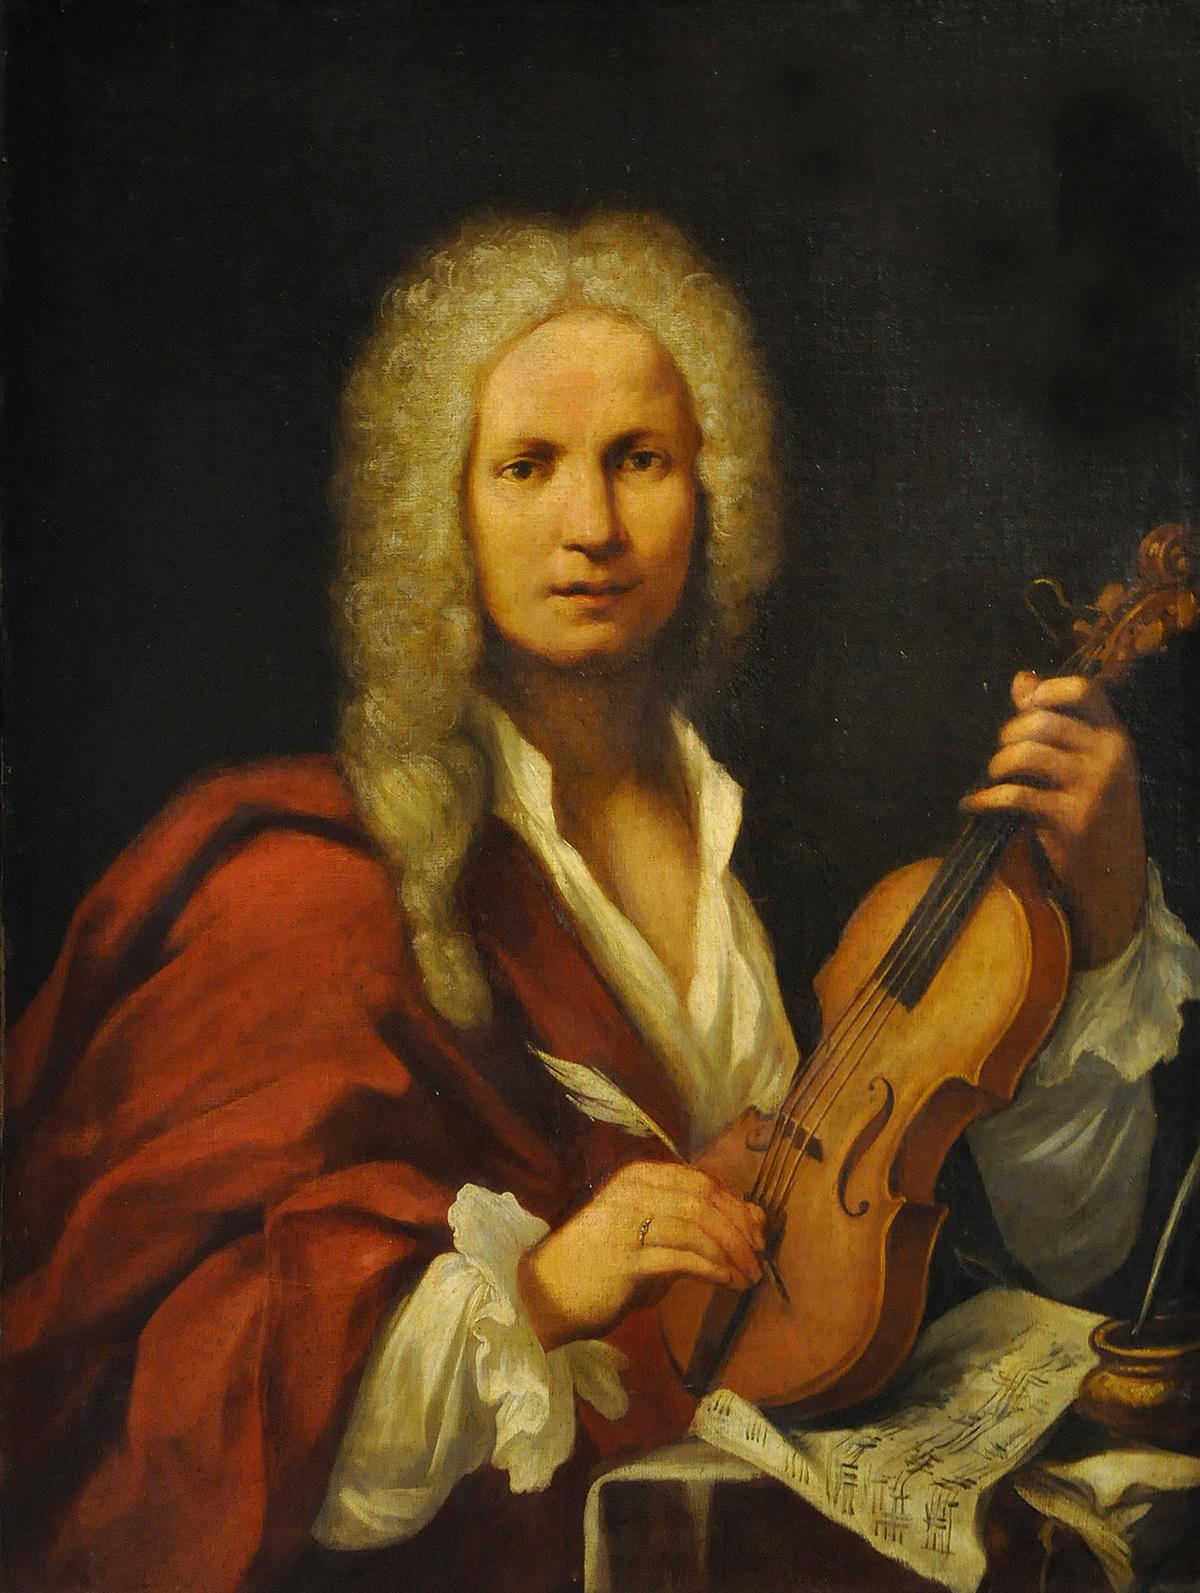 A portrait generally believed to be of Antonio Vivaldi, circa 1723, by an unknown artist. (<a href="https://commons.wikimedia.org/wiki/File:Onbekend_-_Antonio_Vivaldi_-_Bologna_Museo_Internationale_e_biblioteca_della_musica_di_bologna_28-04-2012_9-21-050.jpg">Paul Hermans</a>/<a href="https://creativecommons.org/licenses/by-sa/4.0/deed.en">CC BY-SA 4.0 DEED</a>)